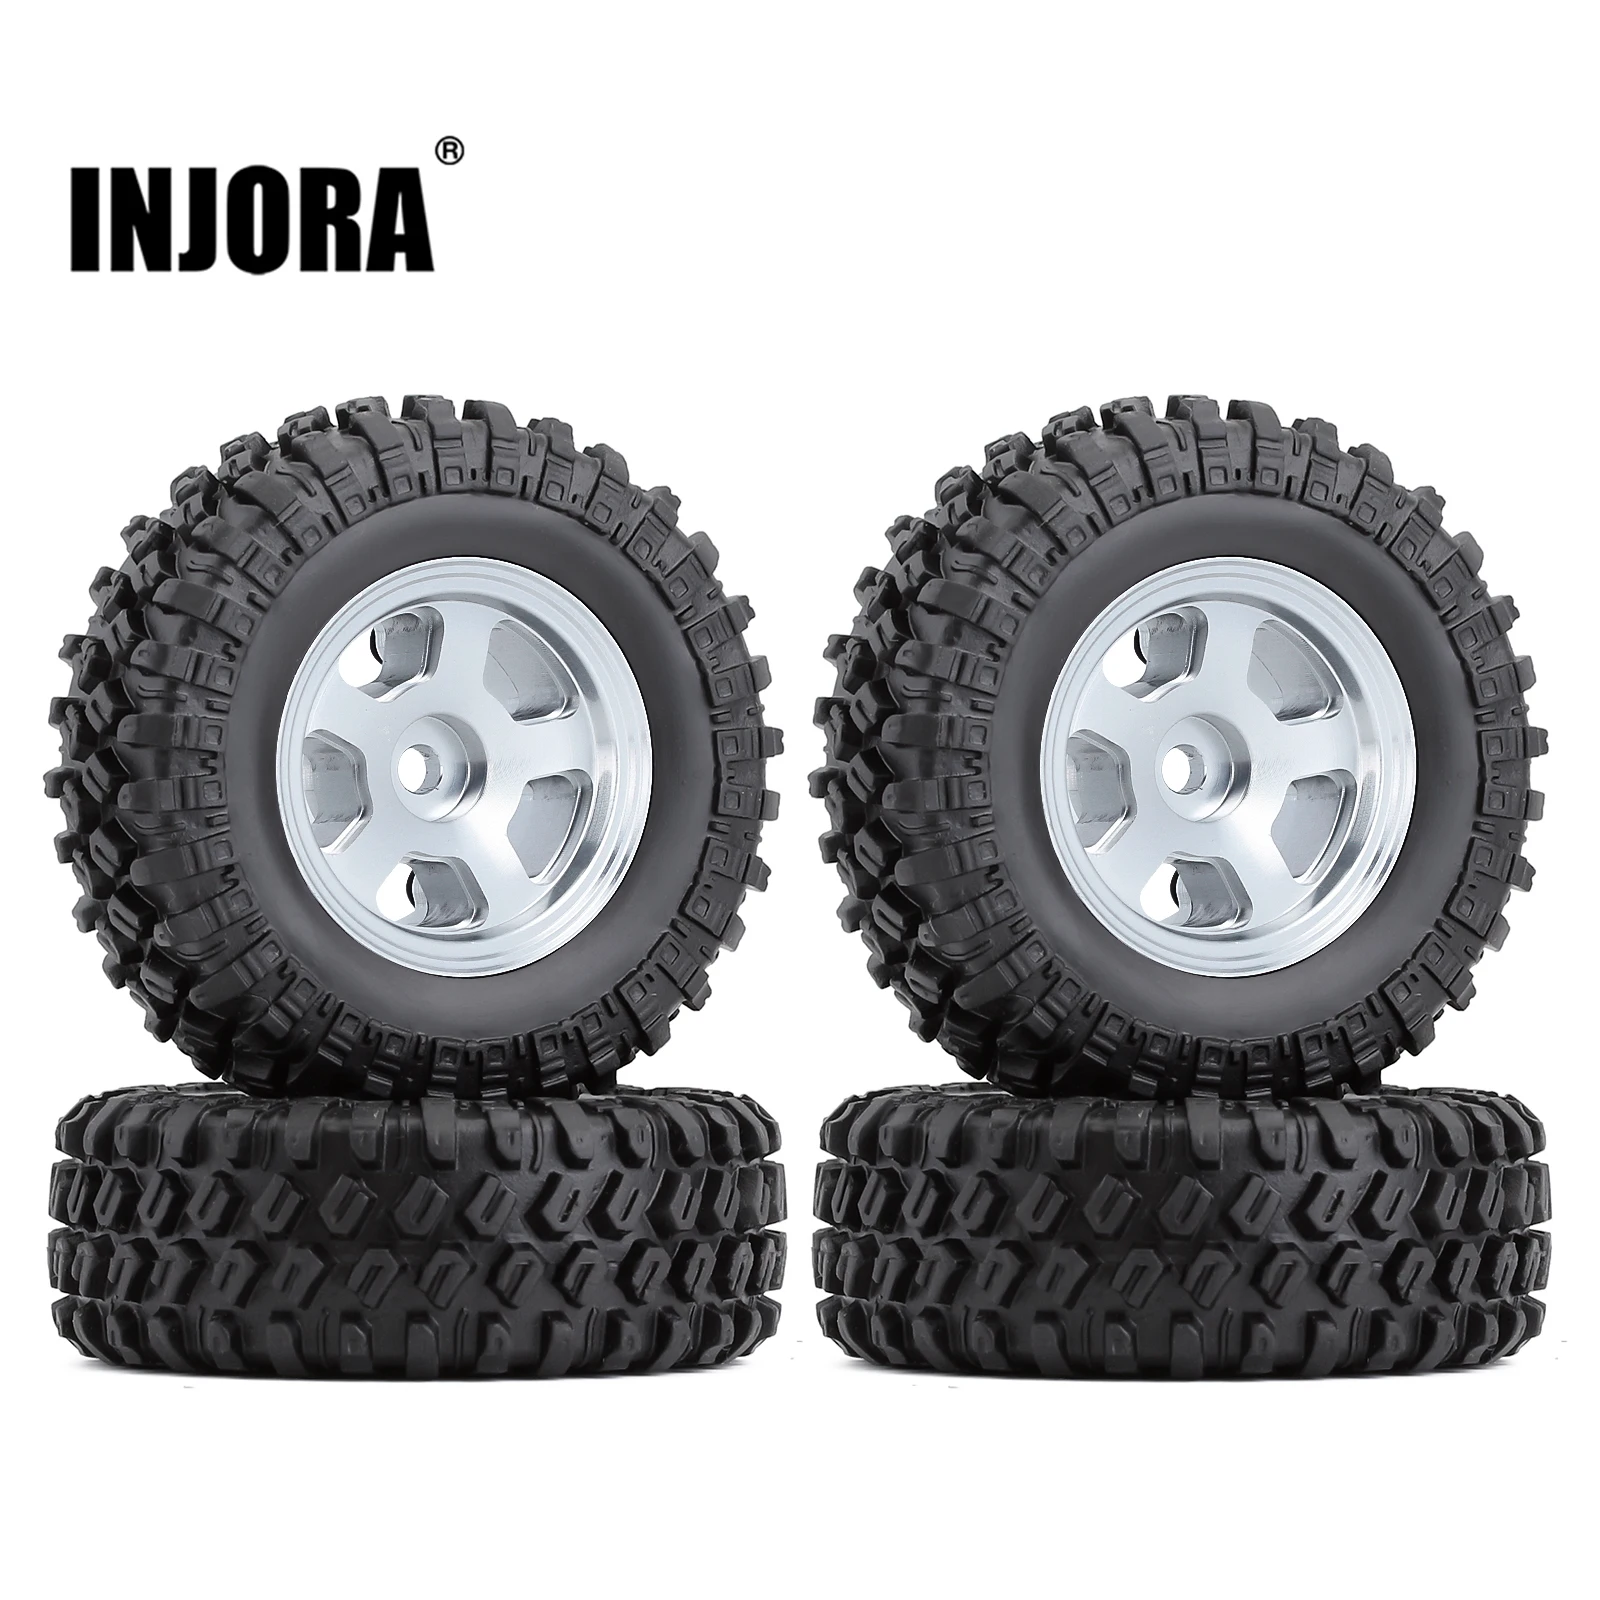 Black INJORA 1.0 Micro Crawler Tires 4Pcs Beadlock Vehicle Wheel & Tires Set for 1/24 RC Crawler Car Axial SCX24 90081 AXI00001 